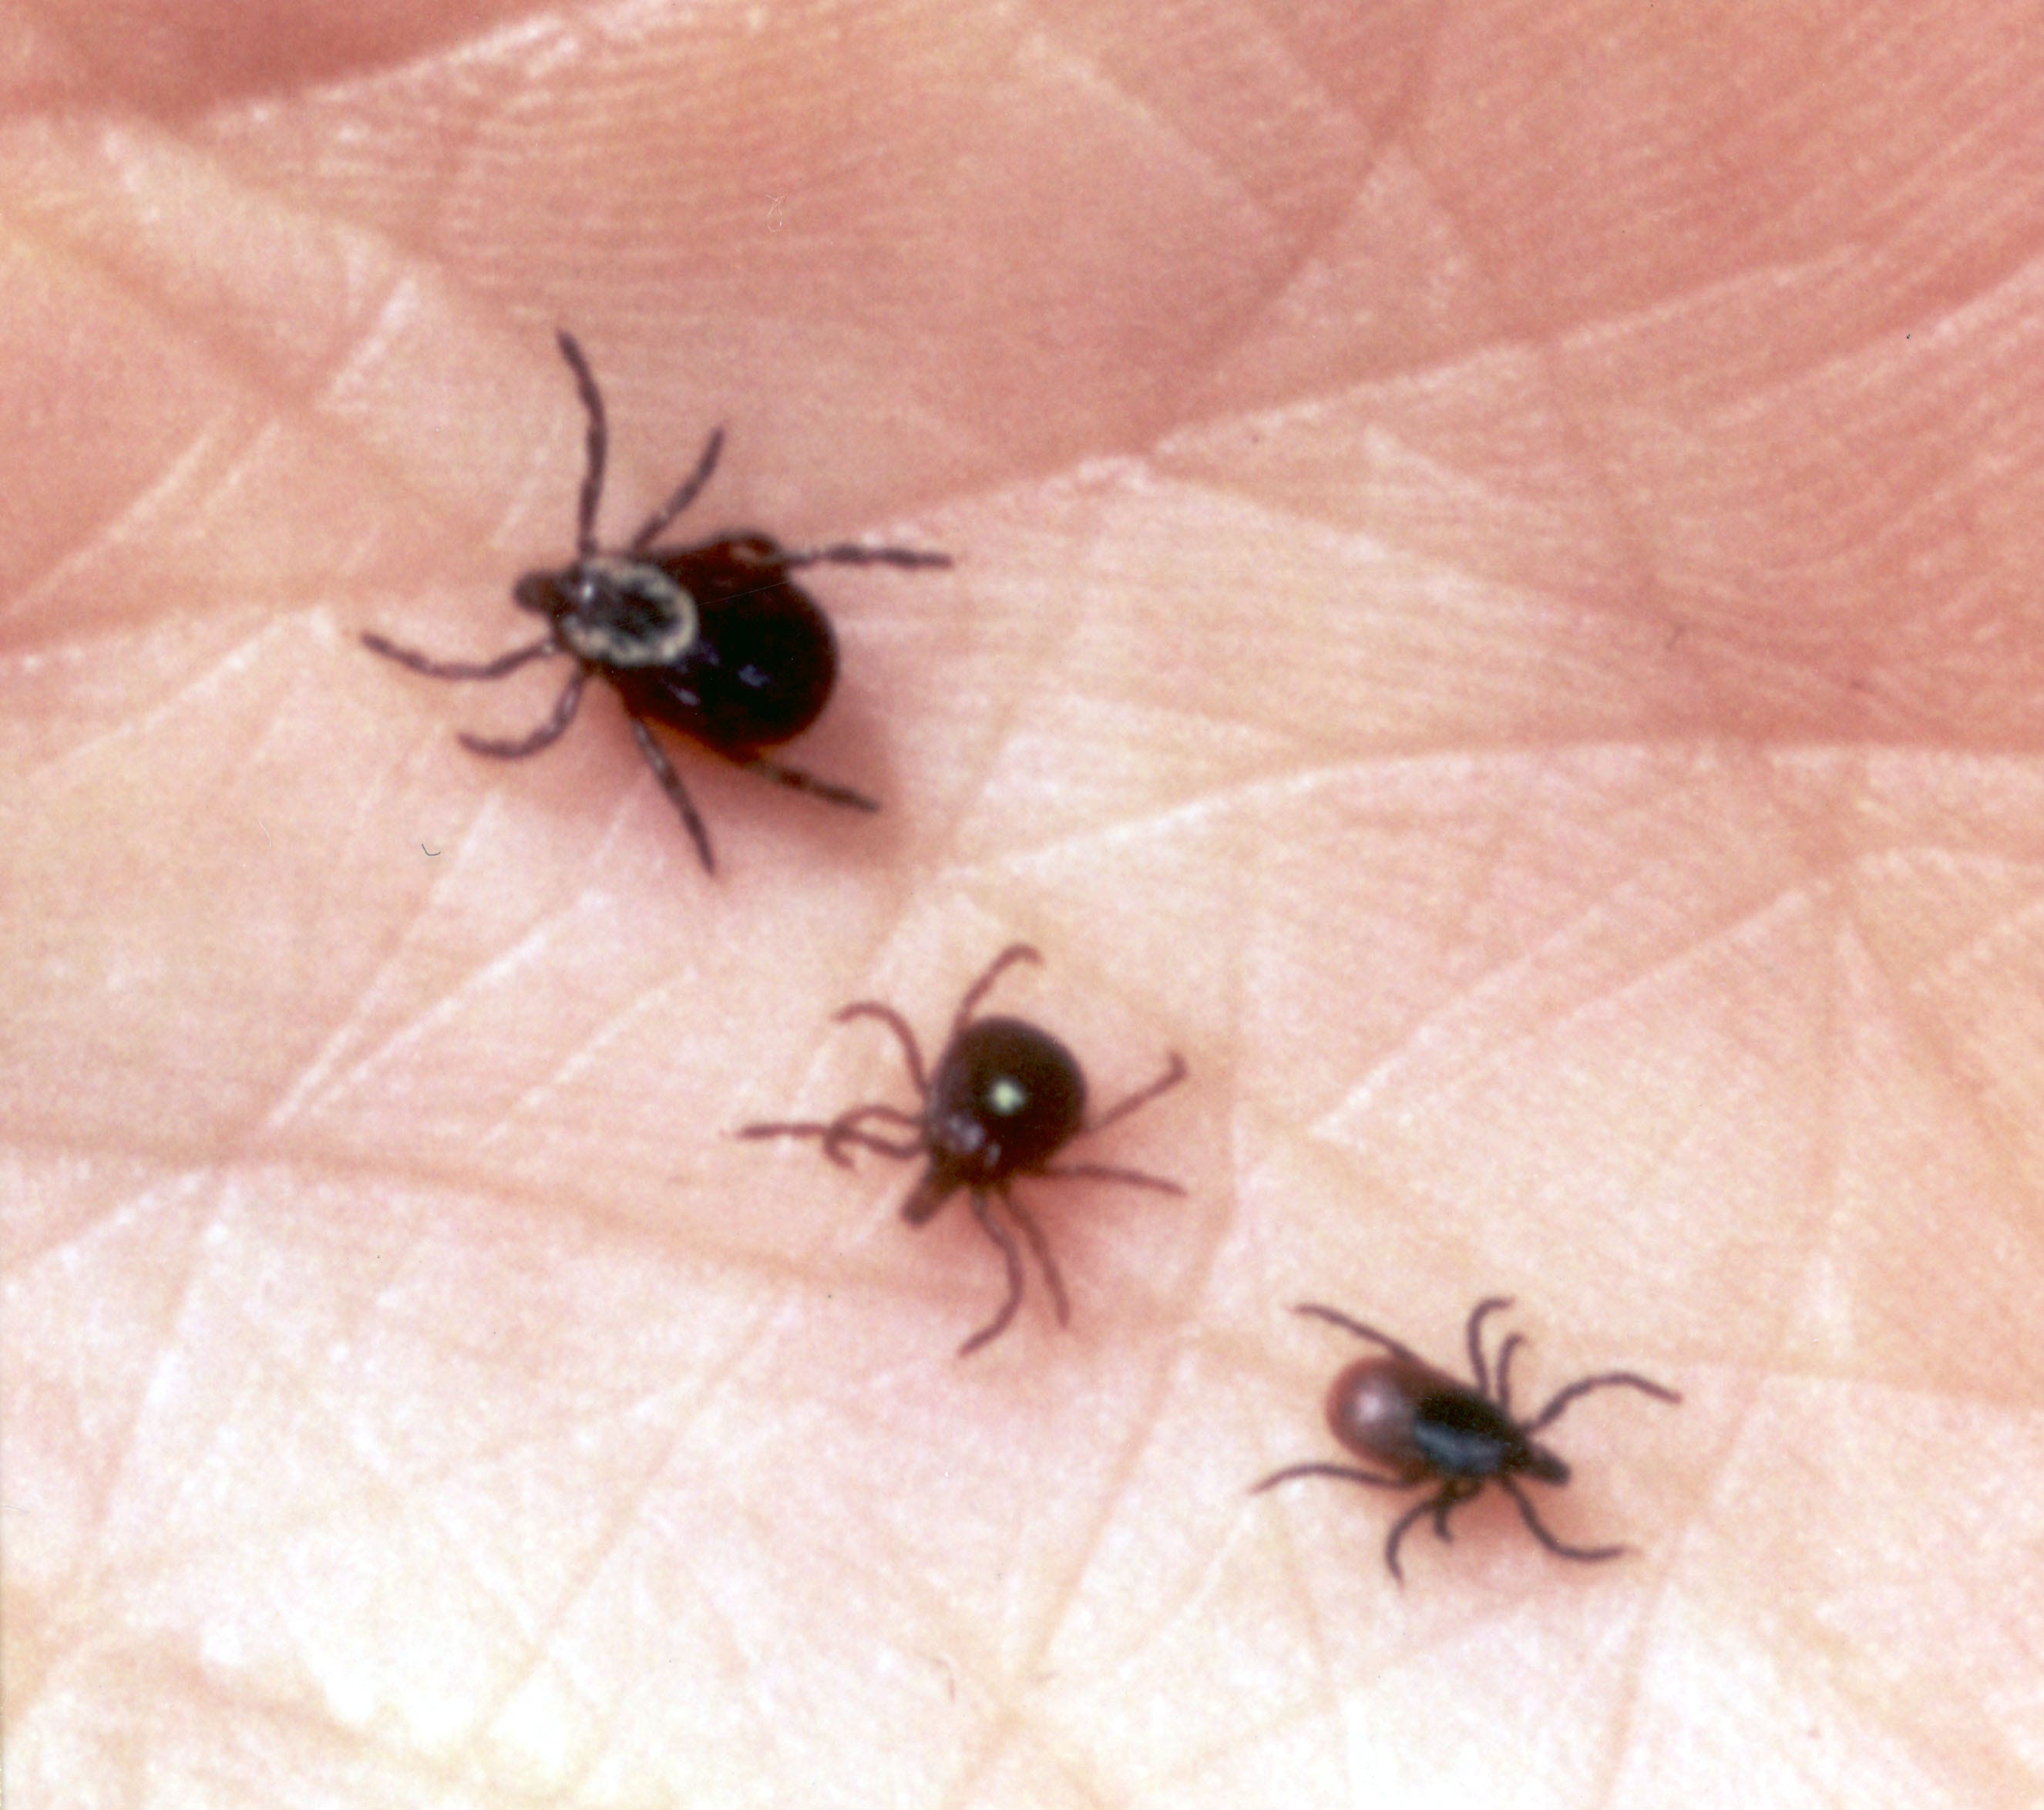 ticks in florida identification